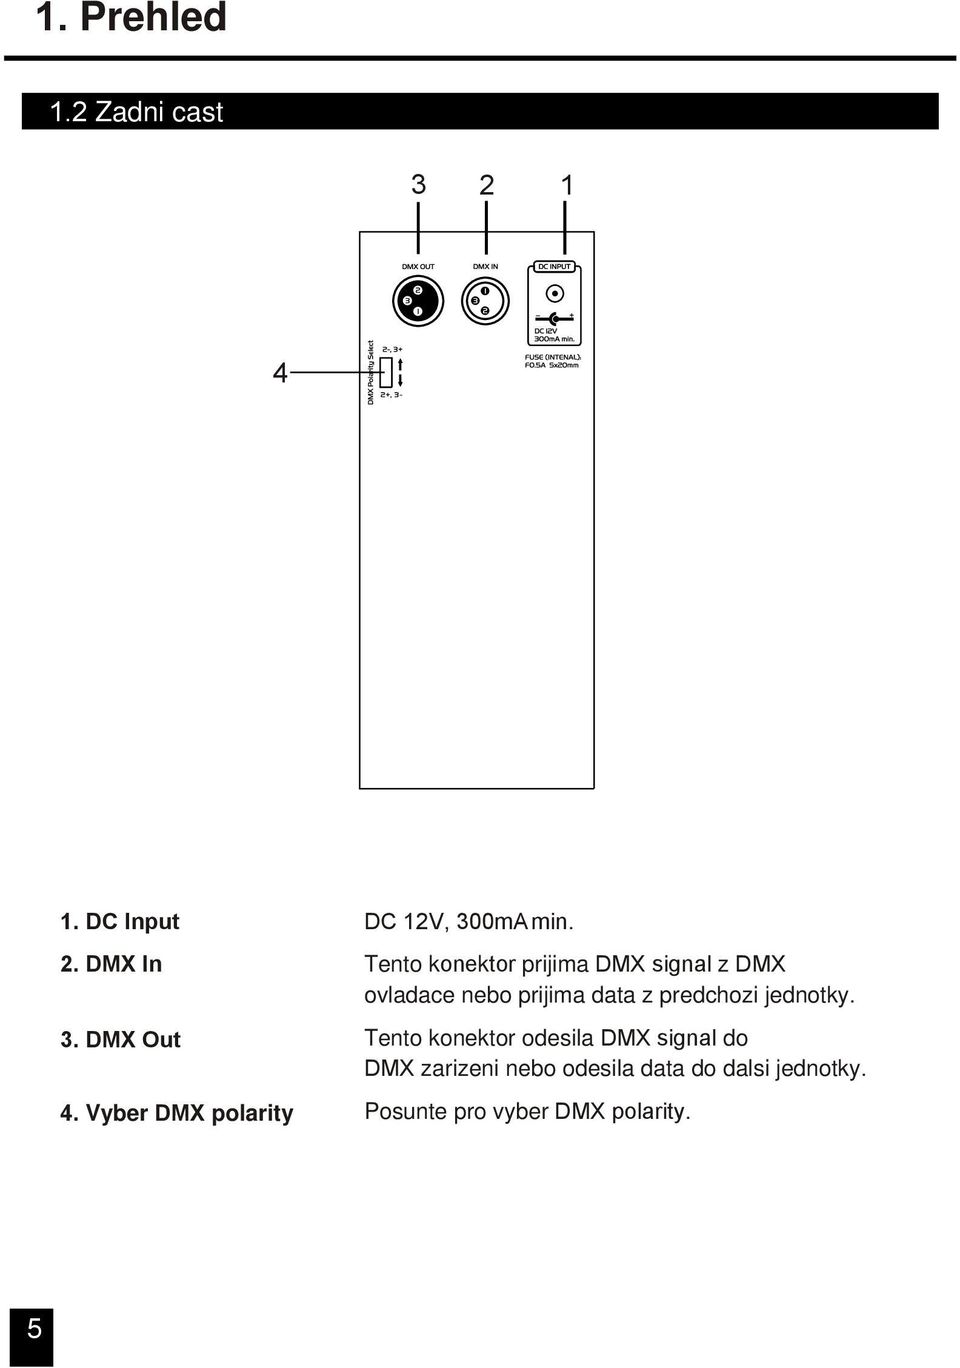 Tento konektor prijima DMX signal z DMX ovladace nebo prijima data z